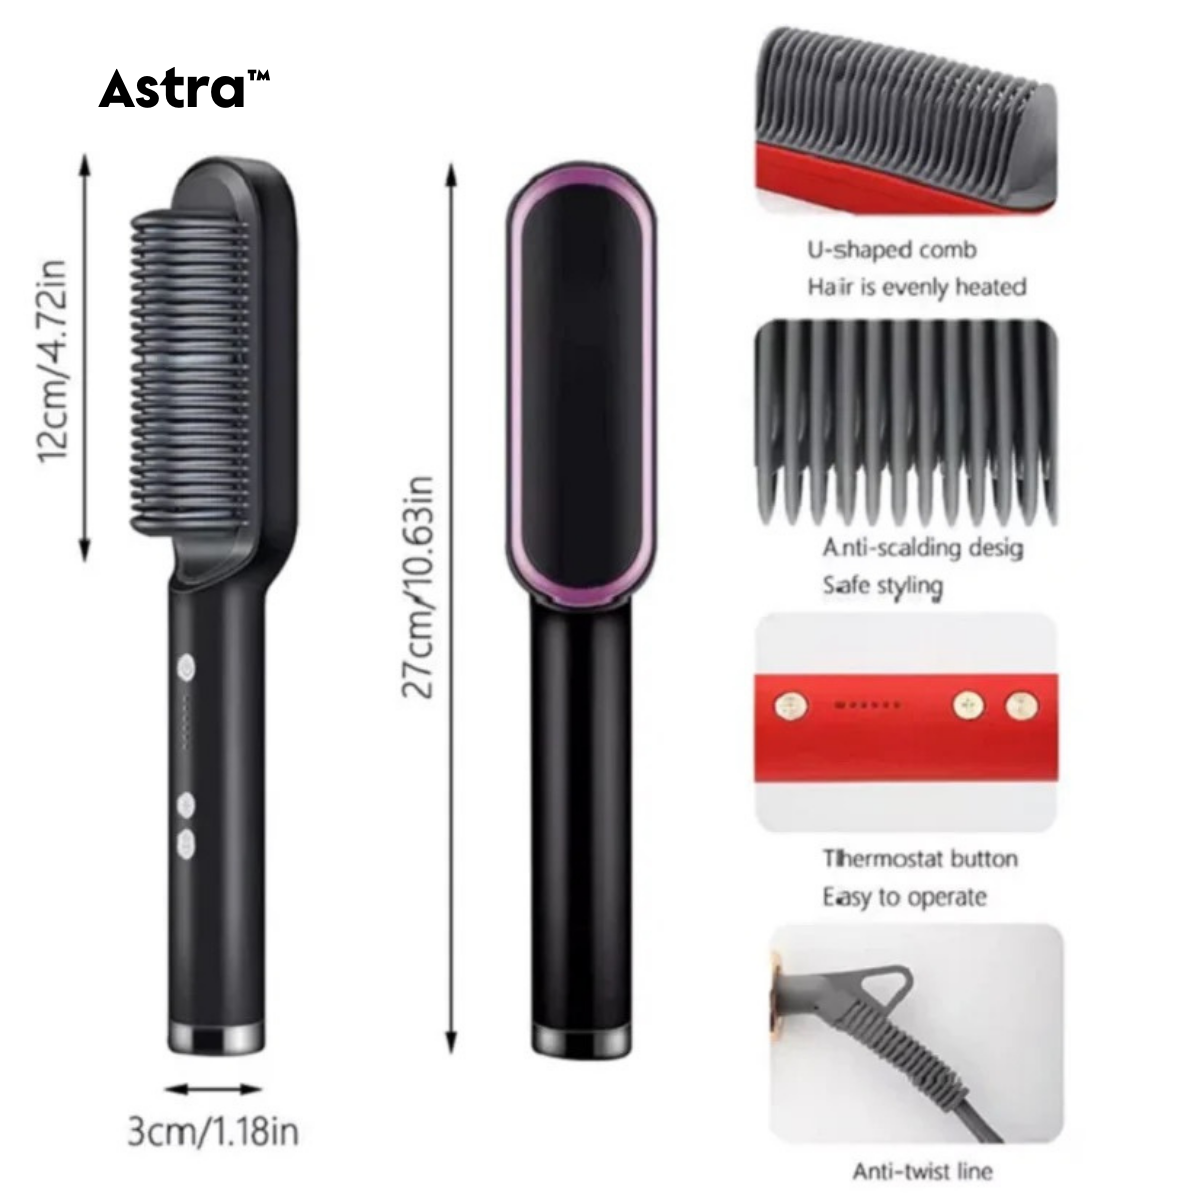 InstaSilk™ 2-in-1 Hair Styling Comb